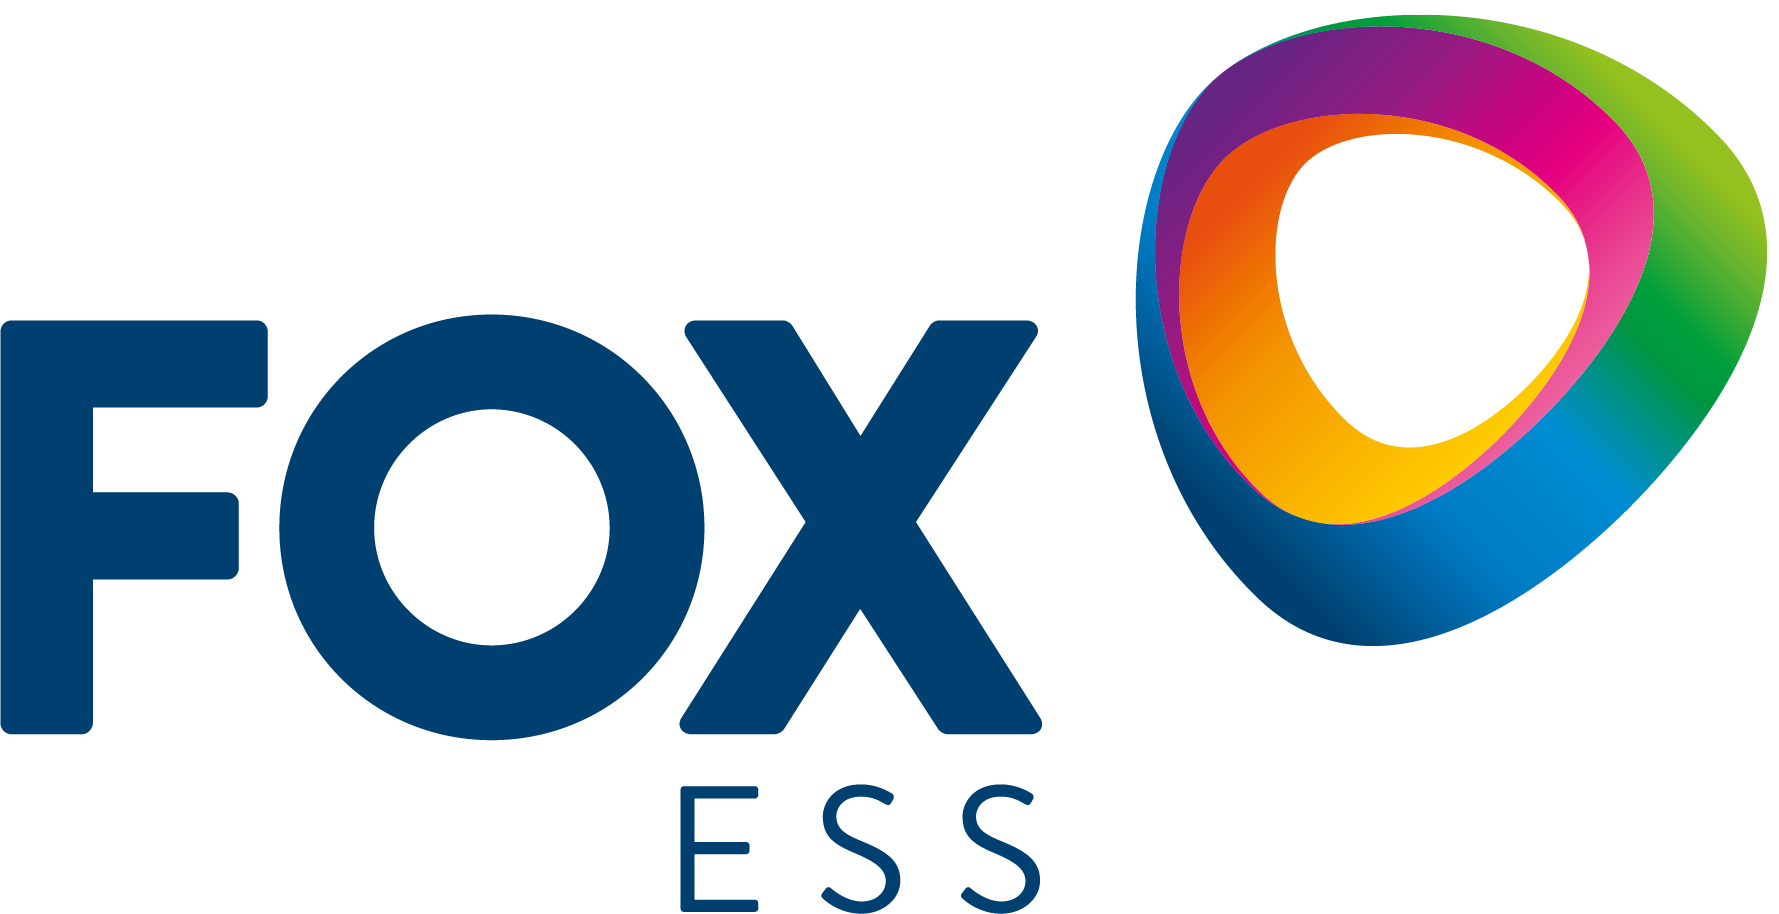 FoxEss logo color